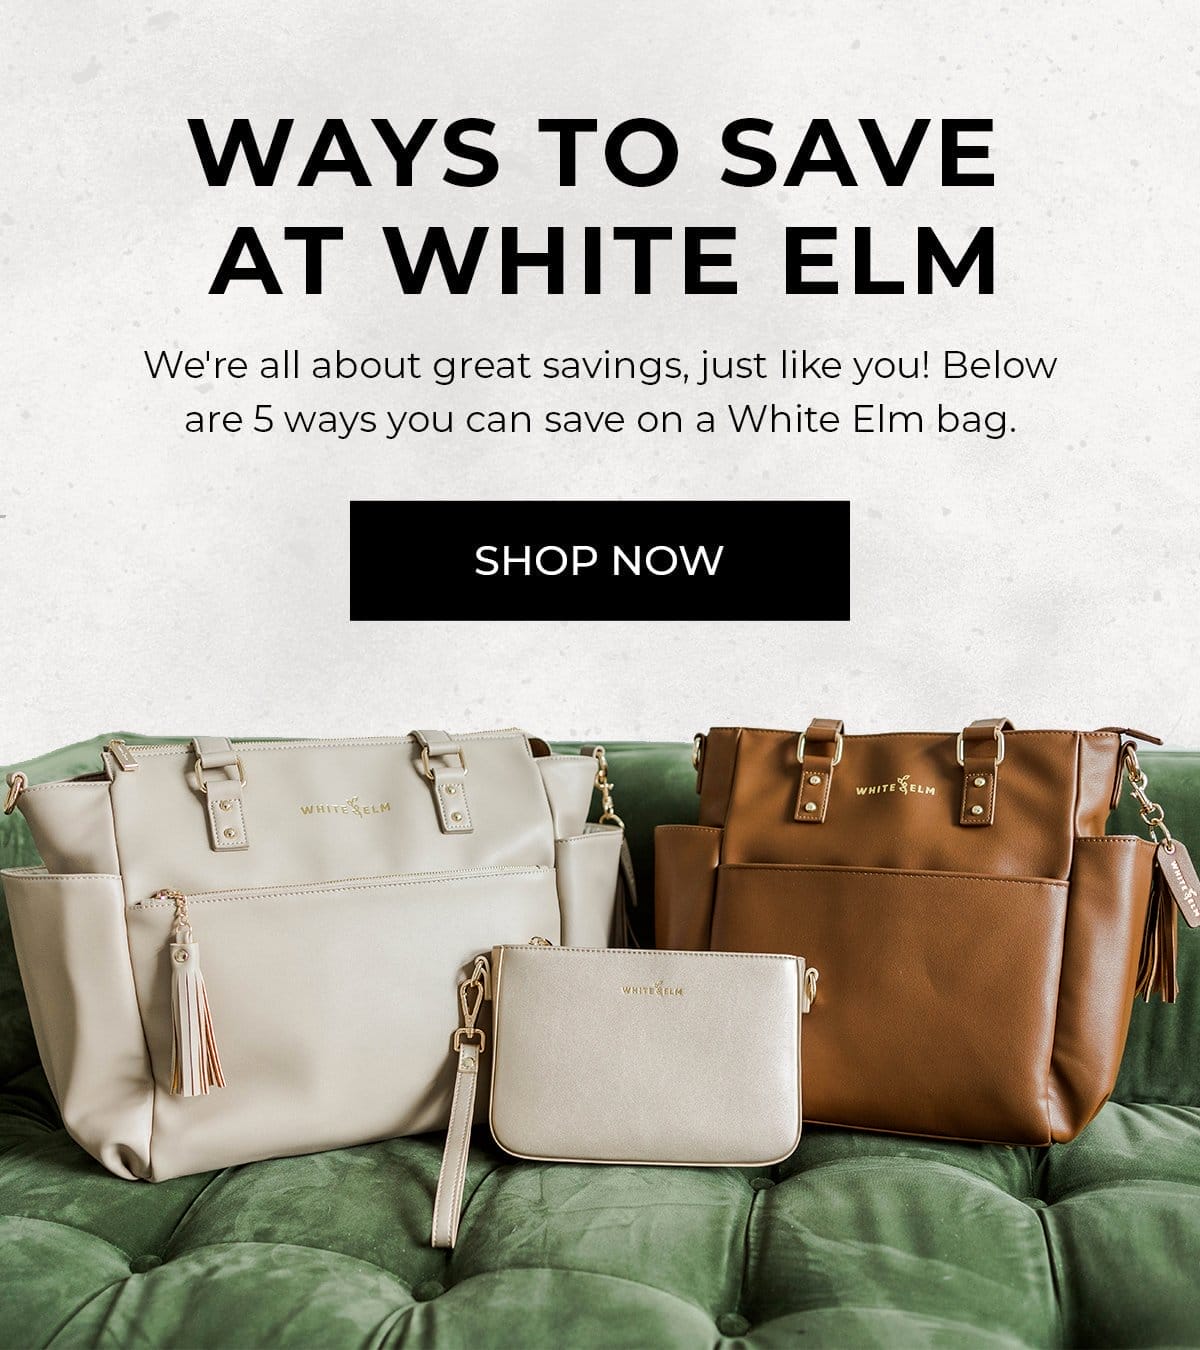 Ways to Save at White Elm